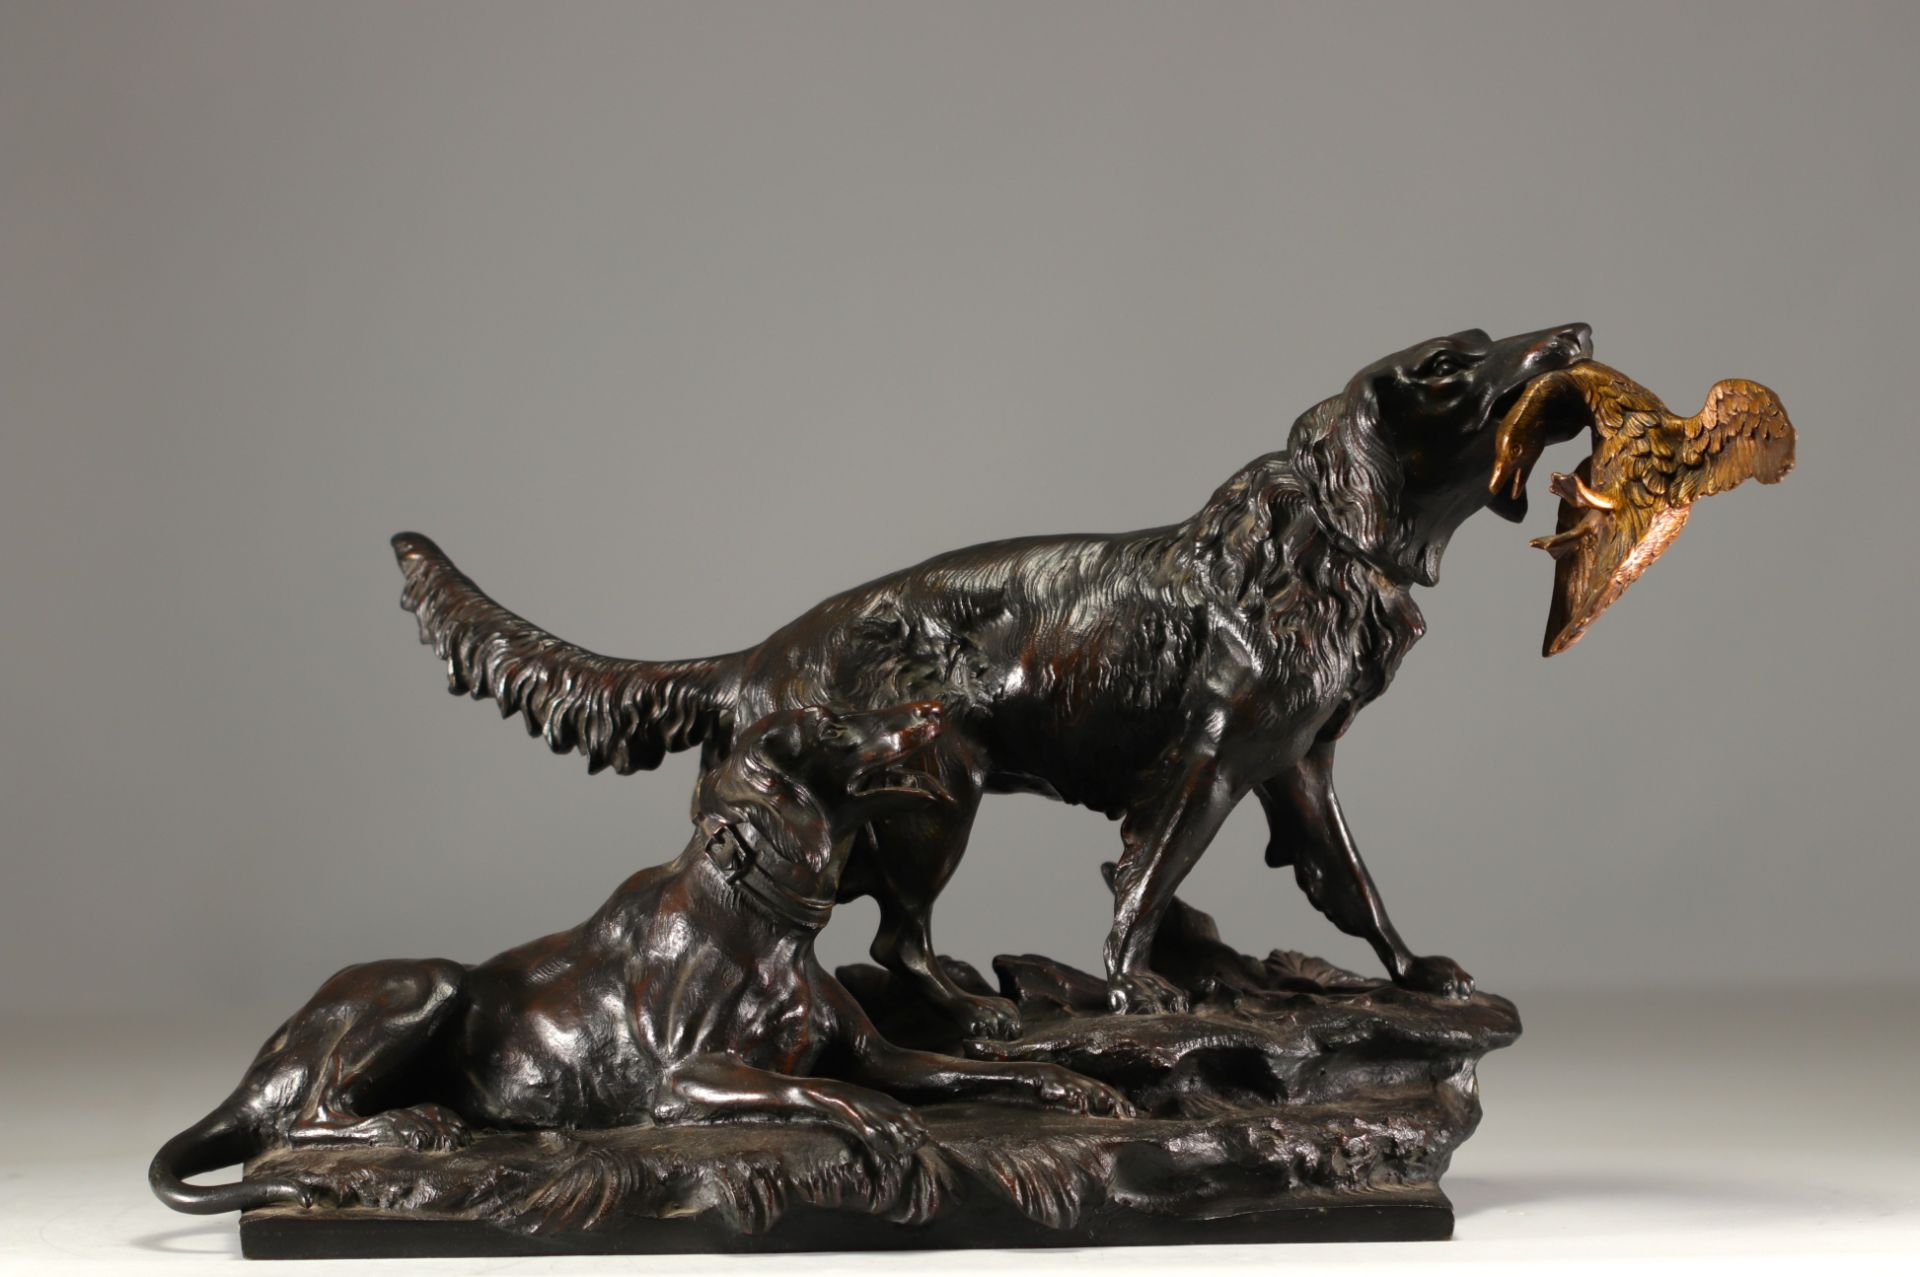 Antonio AMORGASTI (1880-1942) - "Hunting dogs" Bronze sculpture, 1924.